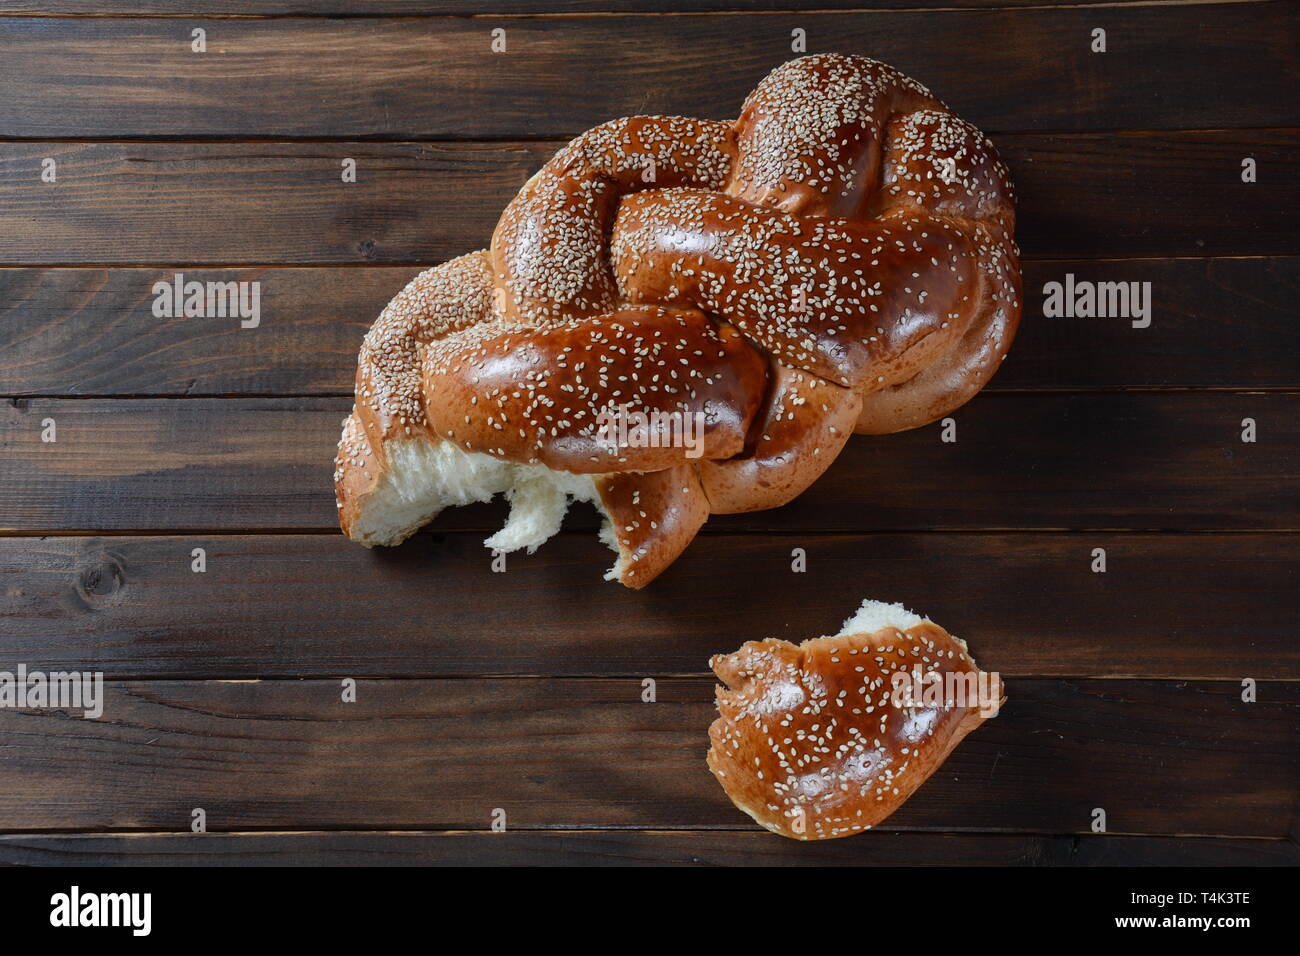 https://c8.alamy.com/comp/T4K3TE/homemade-challah-bread-with-sesame-seeds-jewish-traditional-bread-for-shabbat-T4K3TE.jpg